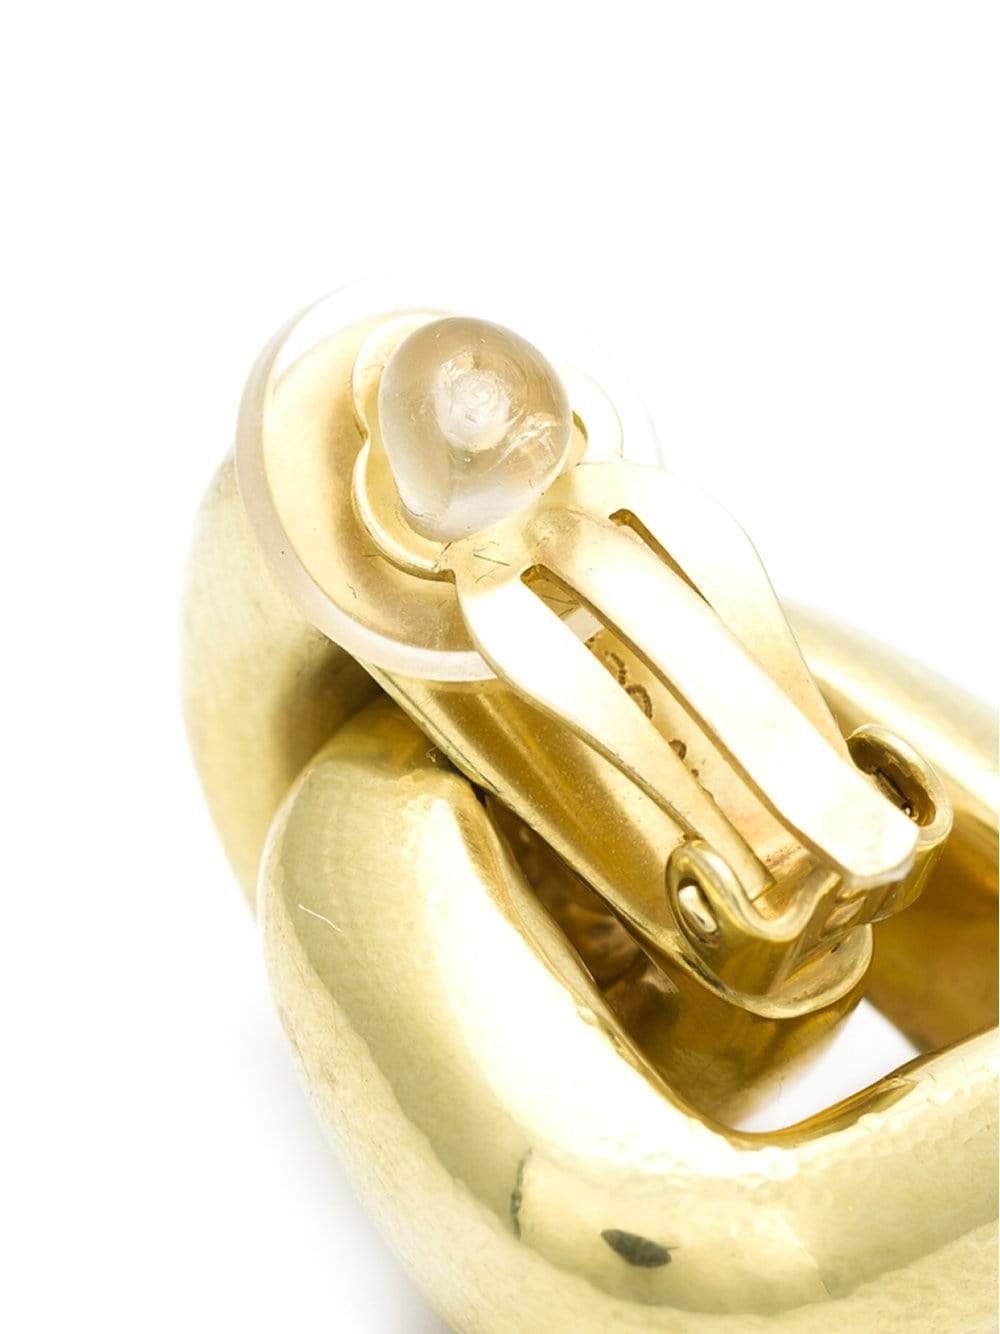 VAUBEL-Small Doorknocker Clip Earrings-GOLD